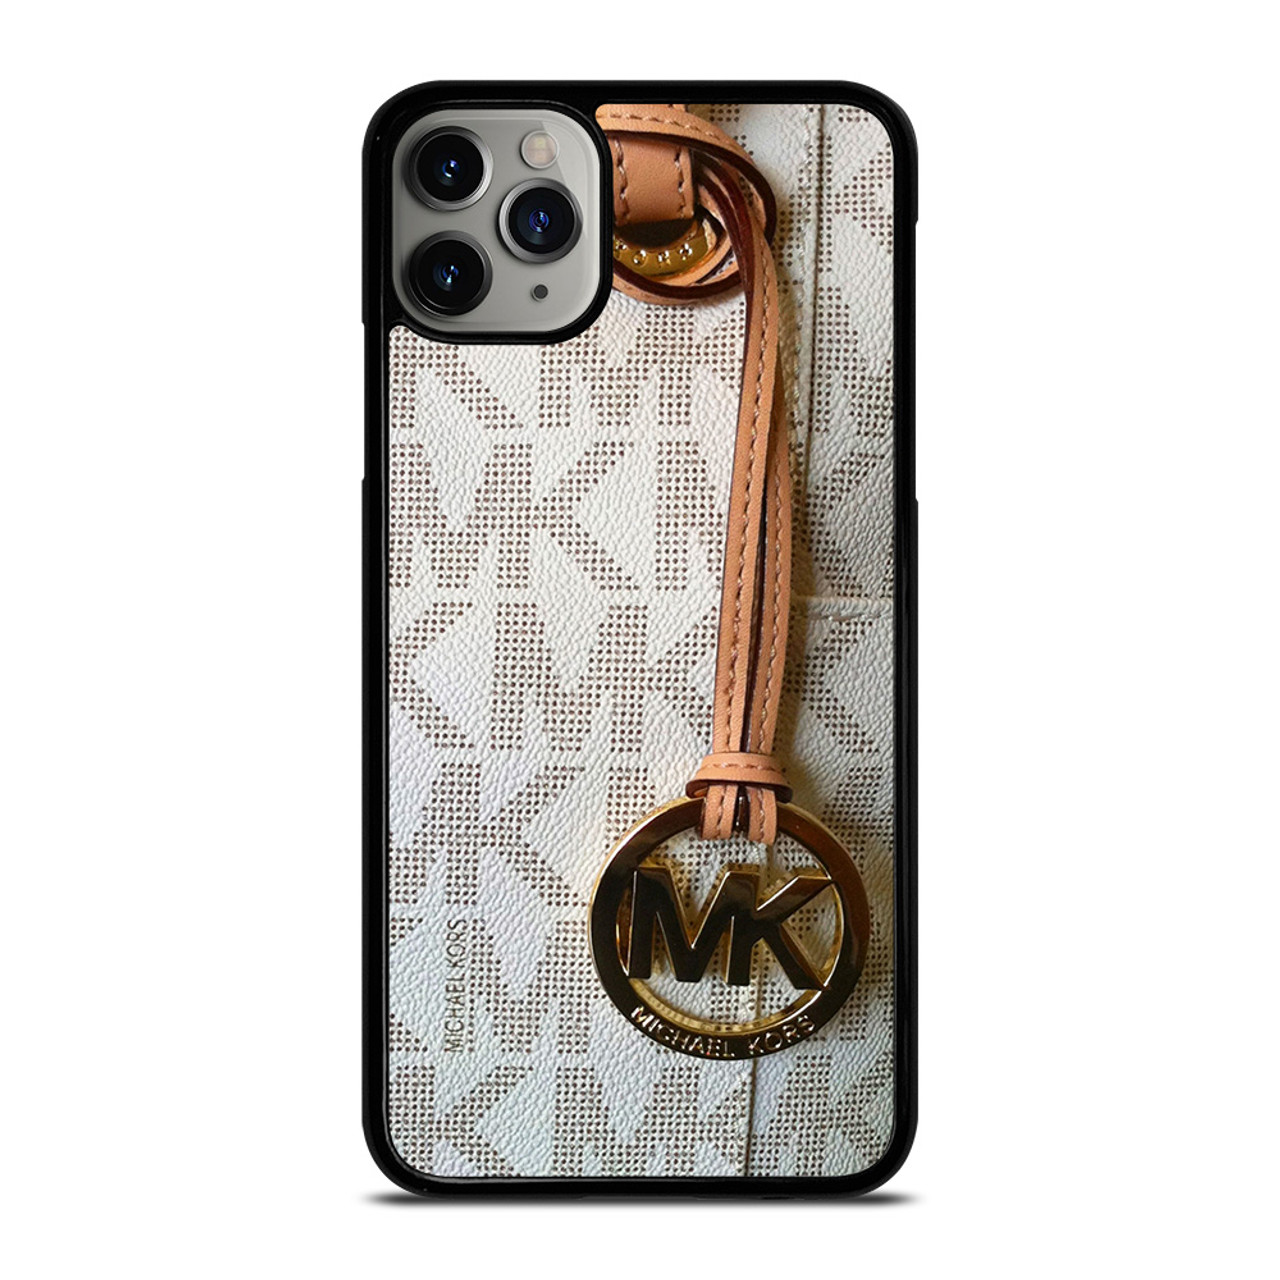 MICHAEL KORS MK WHITE iPhone 11 Pro Max Case Cover